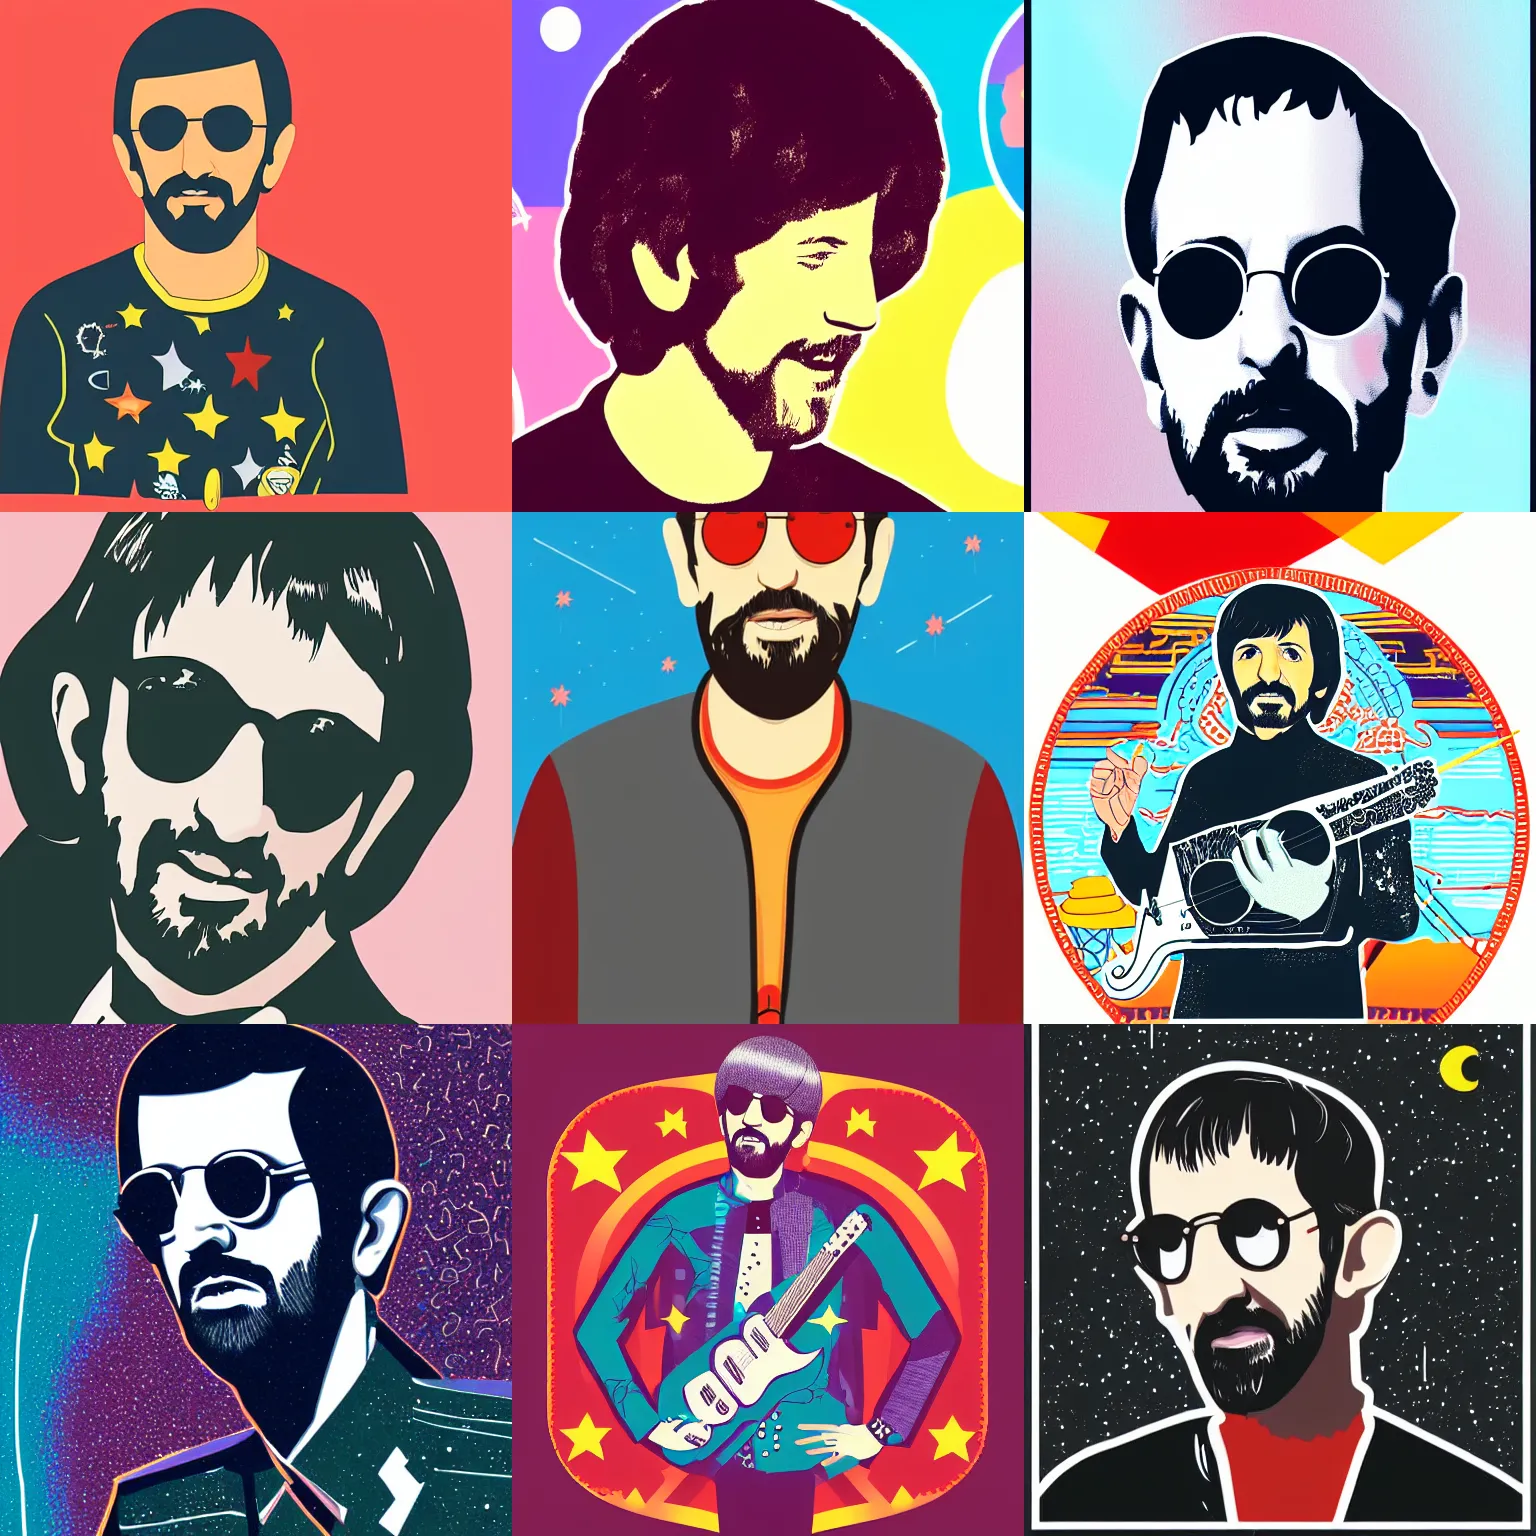 Prompt: a Kurzgesagt illustration of Ringo Starr